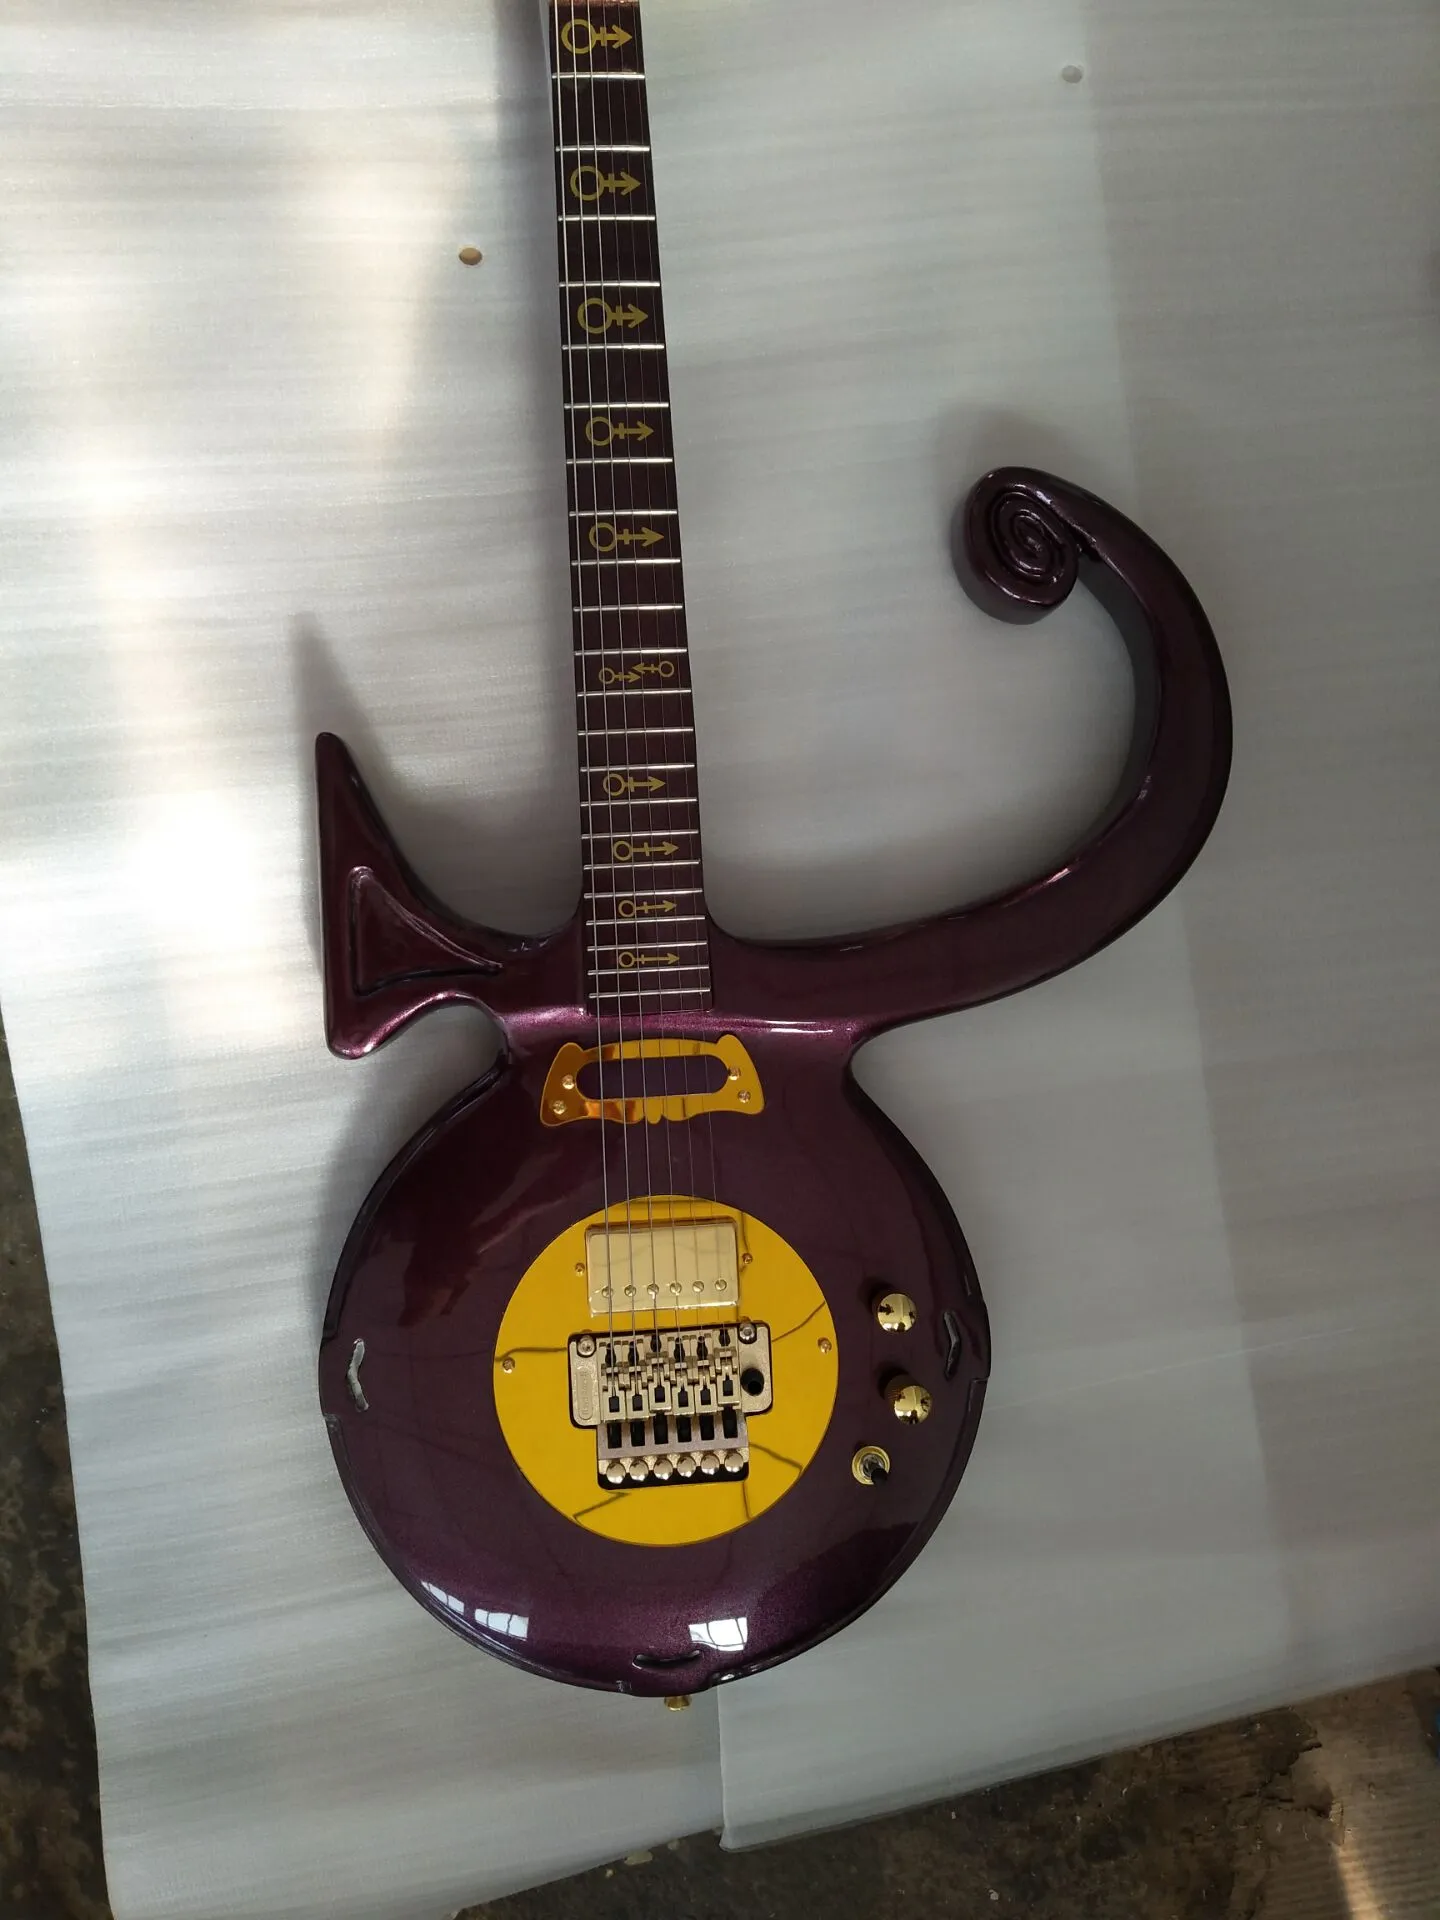 Metallic Purple Prince Symbol Love Guitar Electric Guitar Floyd Rose Tremolo Bridge, Gold Lustro Backguard Back Cover, Special Cloud Inlay